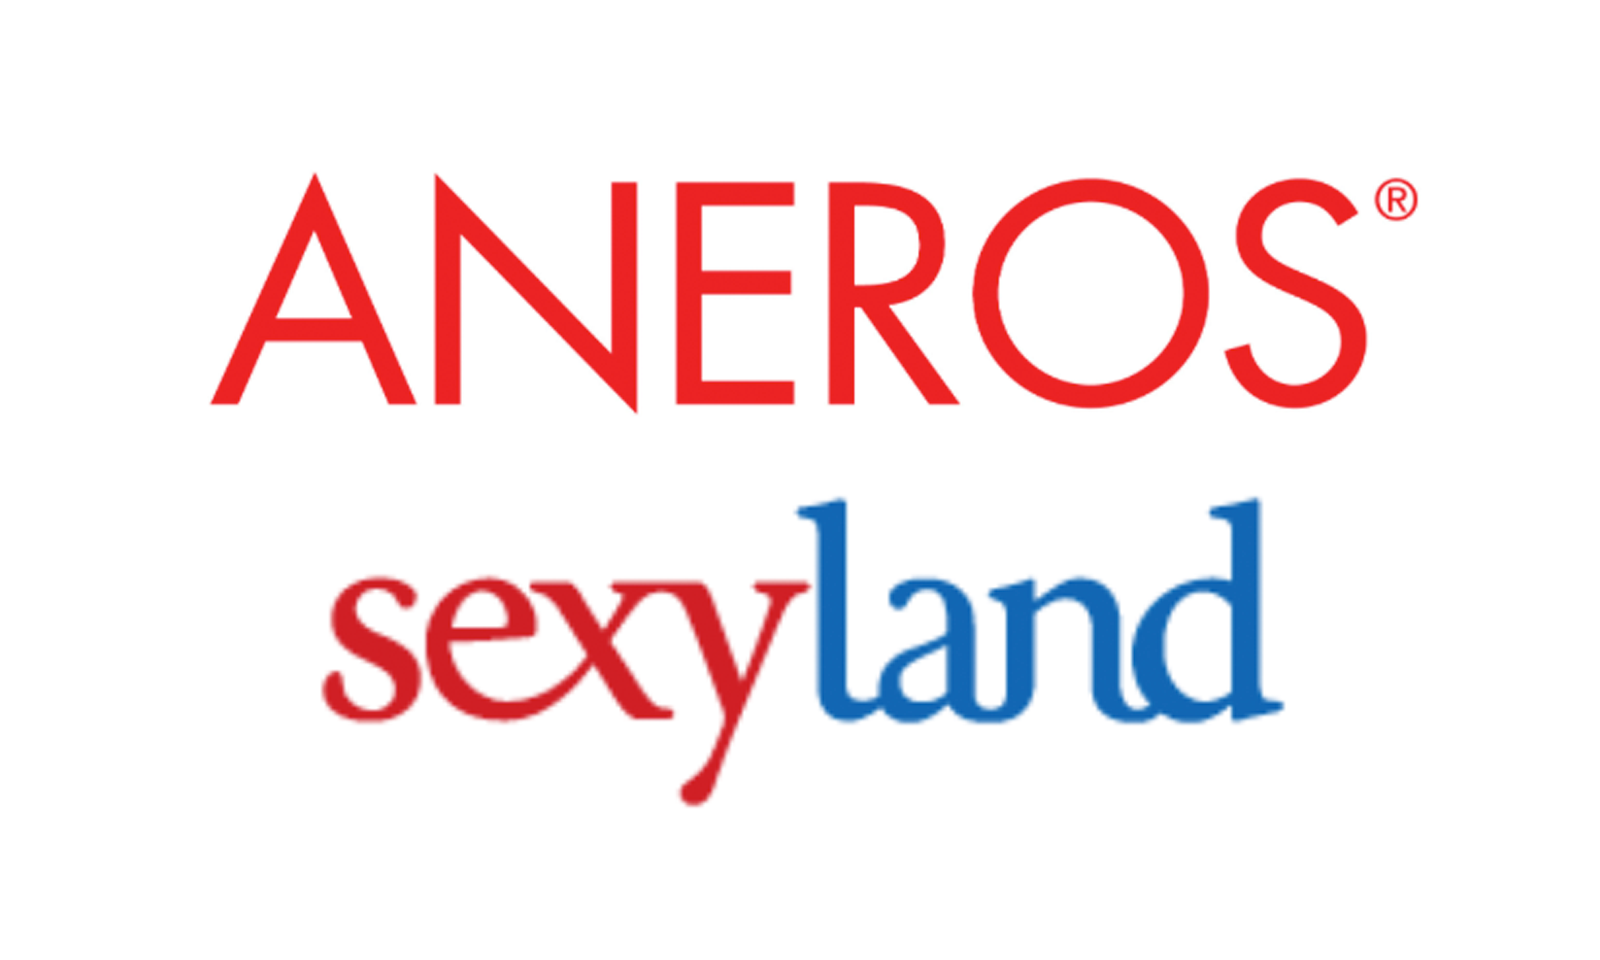 Aneros, Sexyland Australia Partner for Movember Campaign